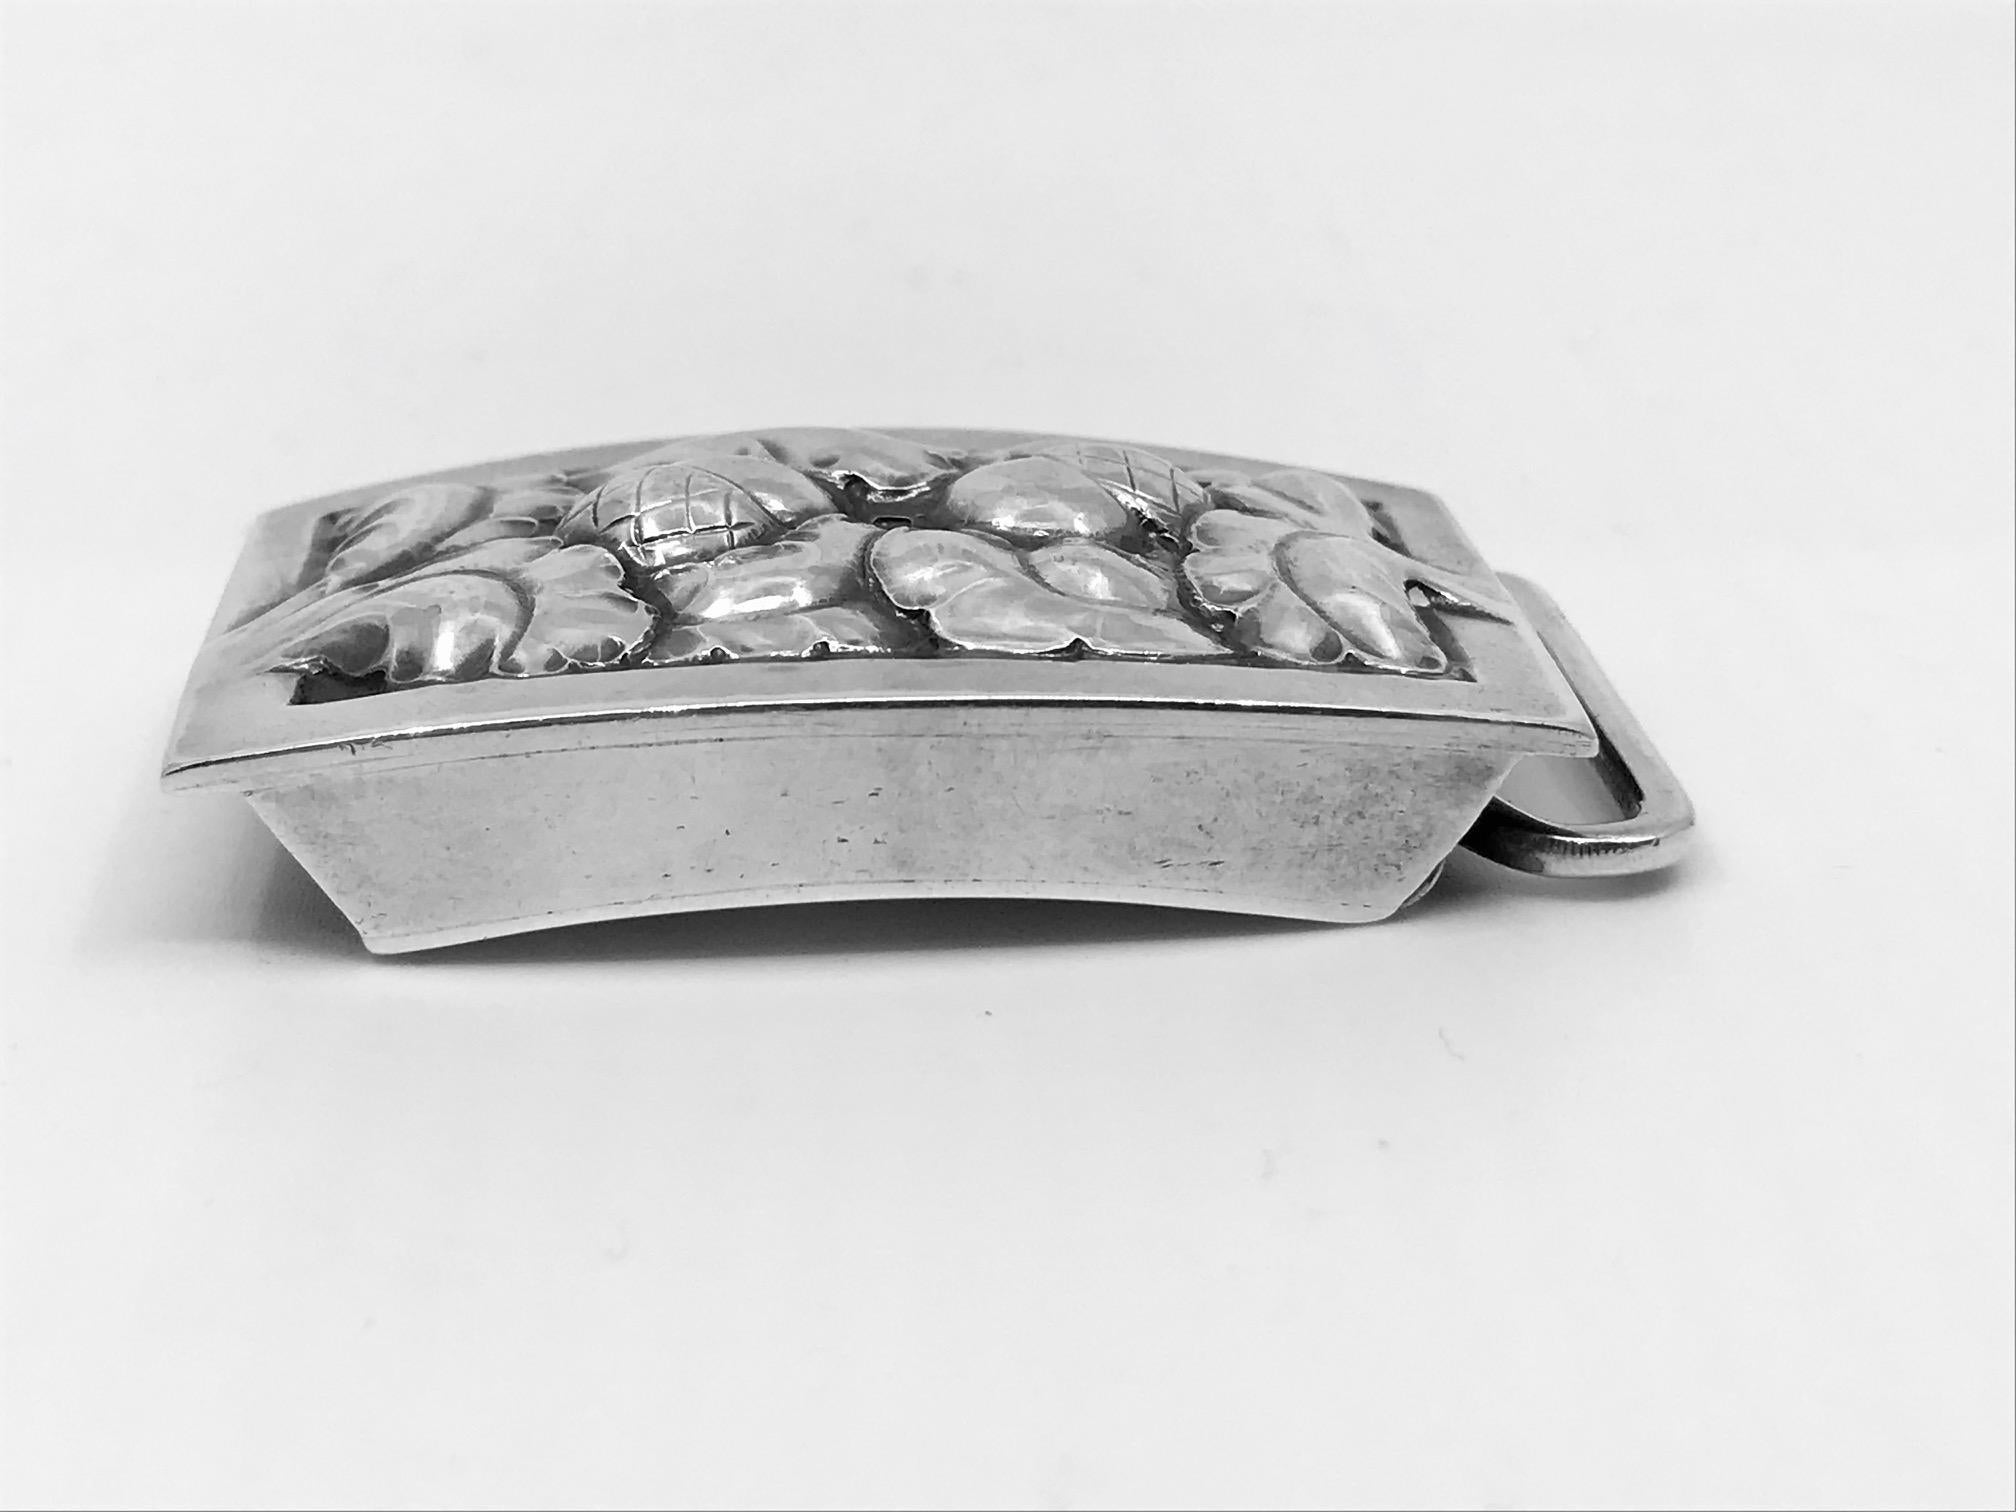 Vintage sterling silver belt Georg Jensen buckle with a front panel of leaves and acorns, design #67.
Measures 2 1/4